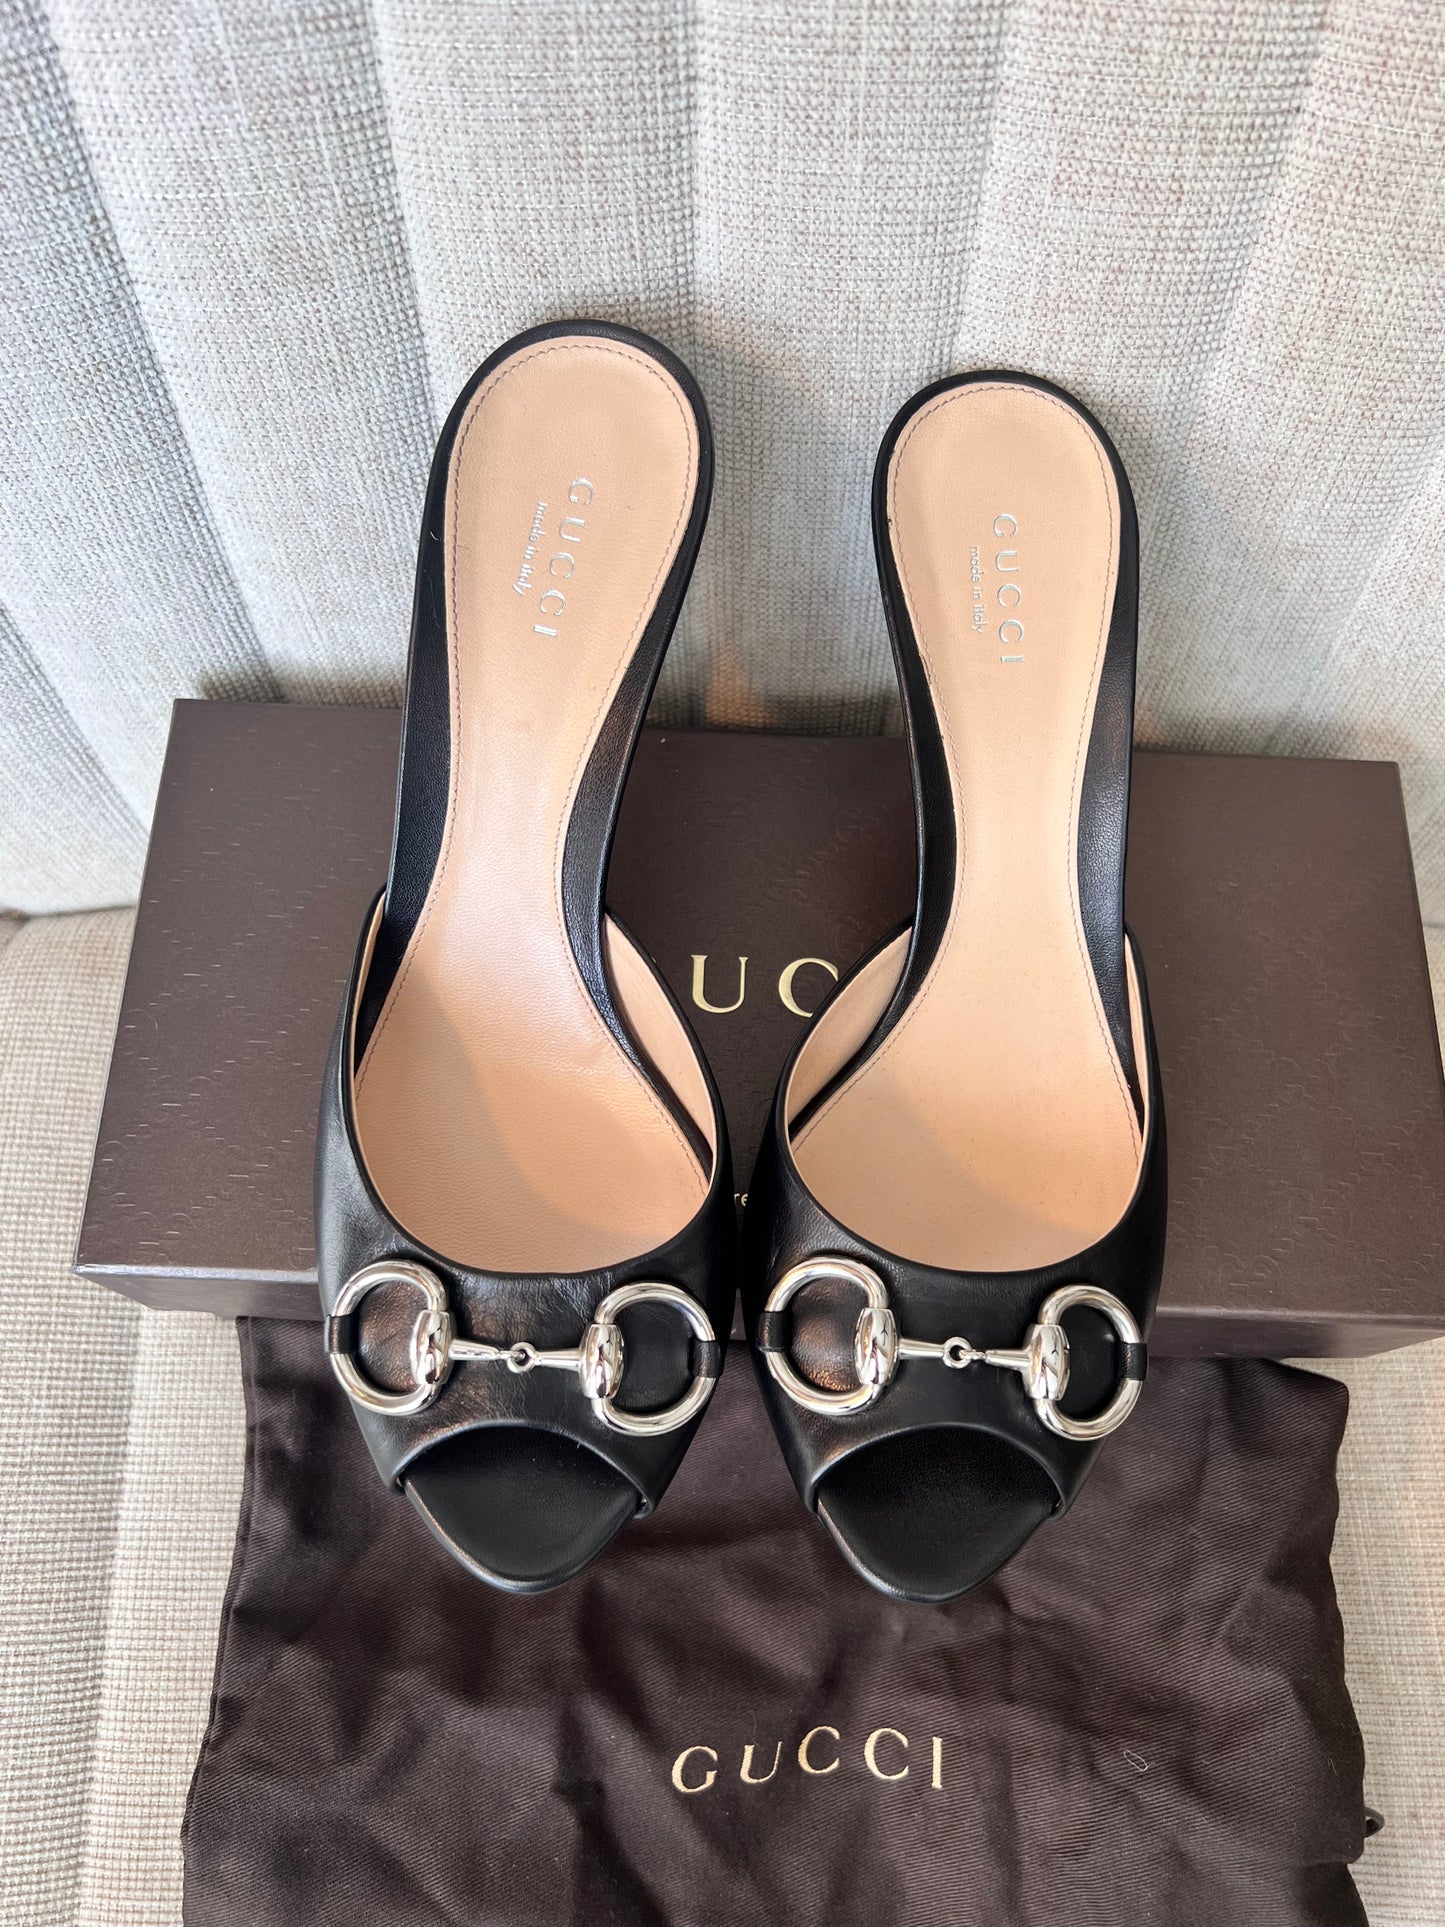 Gucci horsebit mule heels